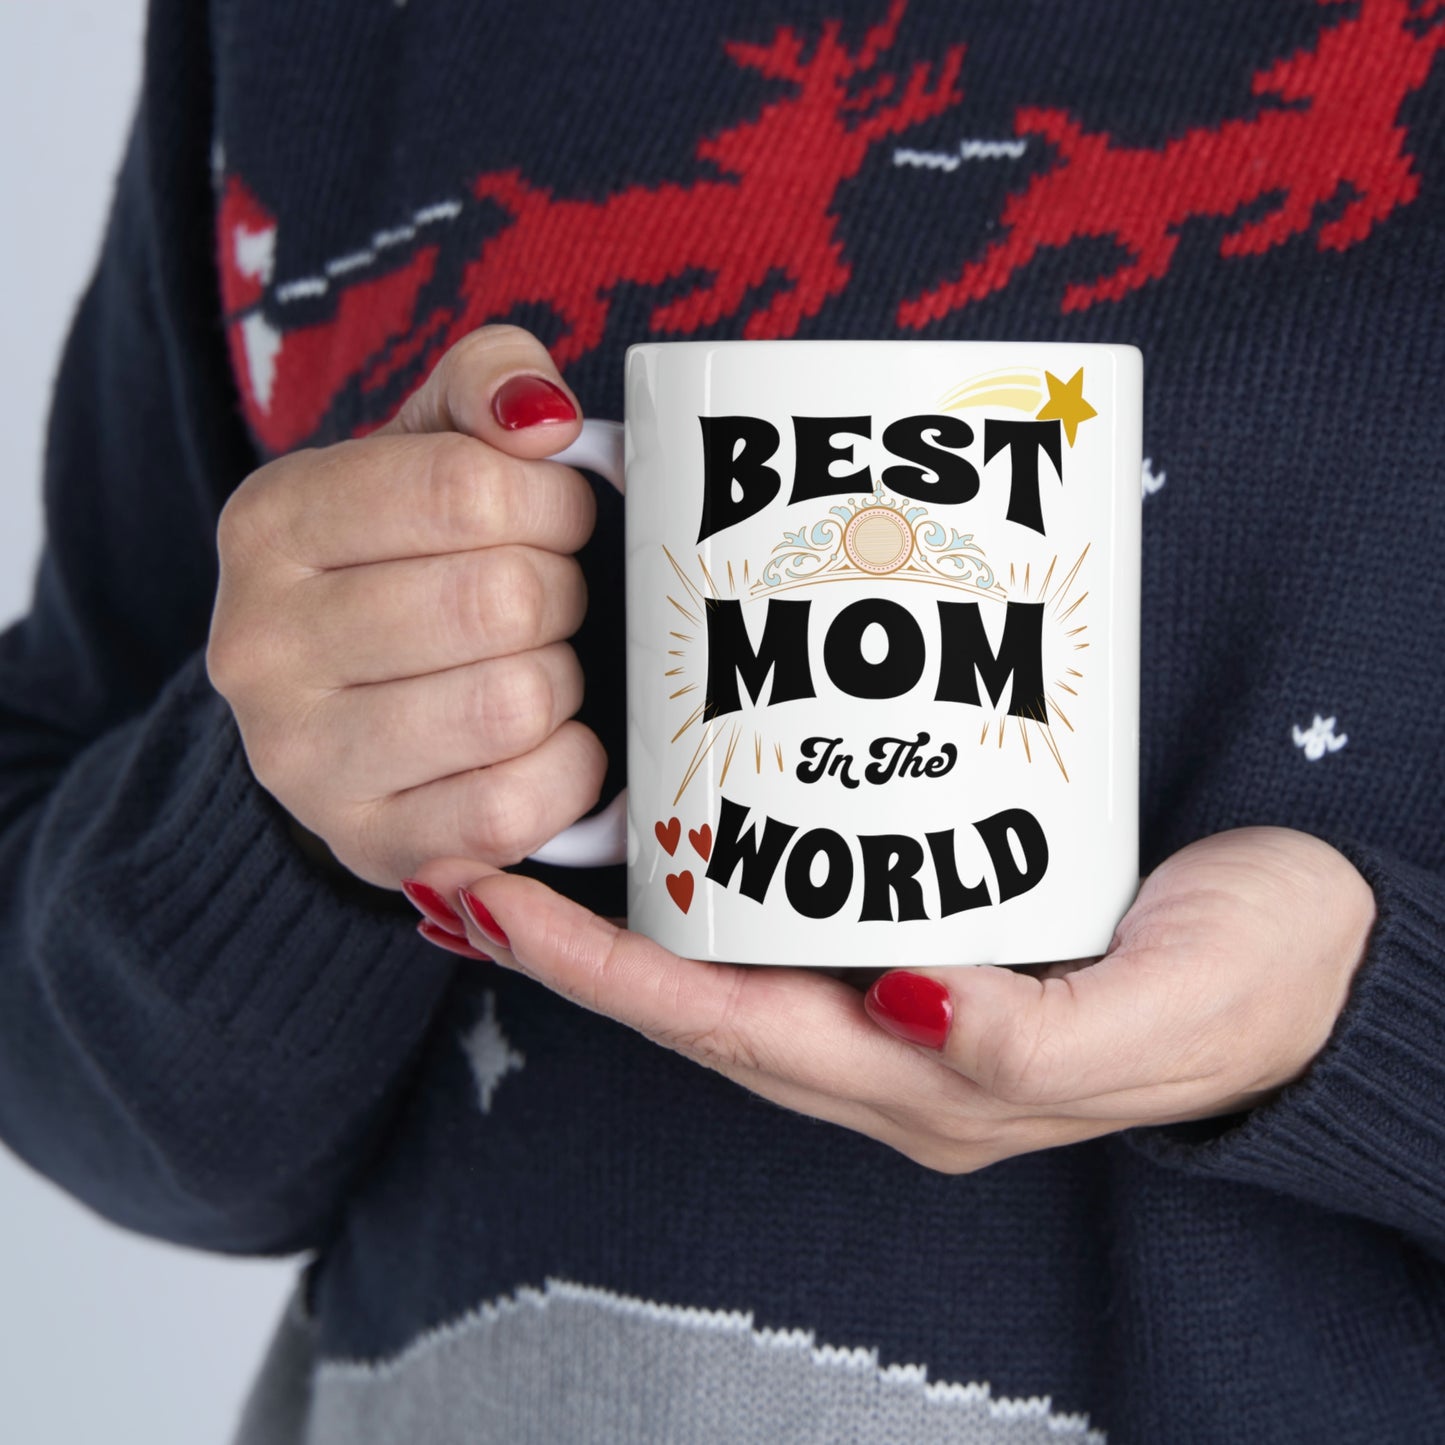 Ceramic Mug 11oz, Best Mom in the World, Gifts for Mom